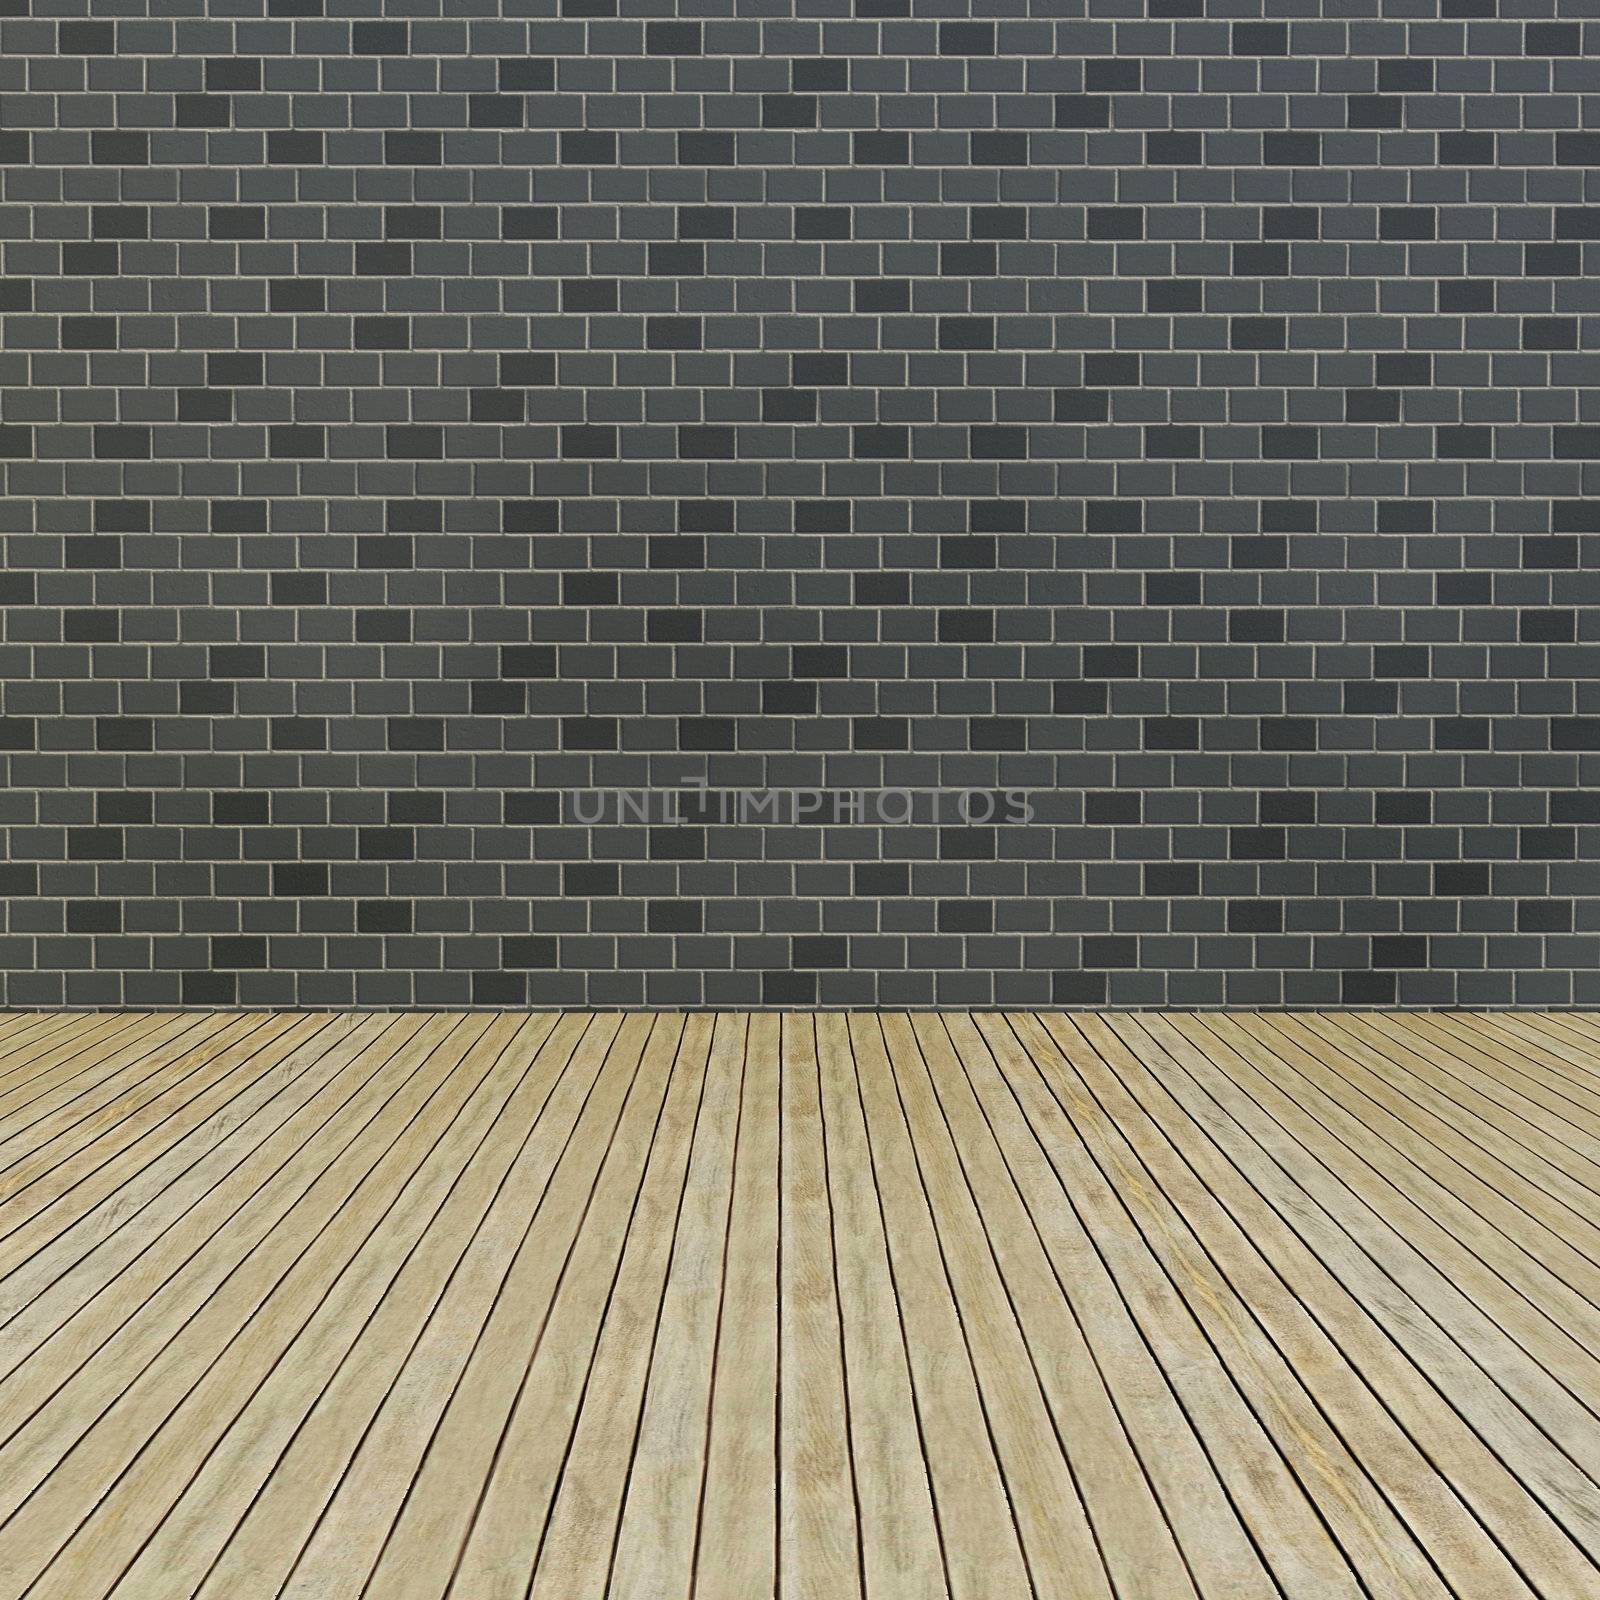 Wood floor and pattern brick wall interior